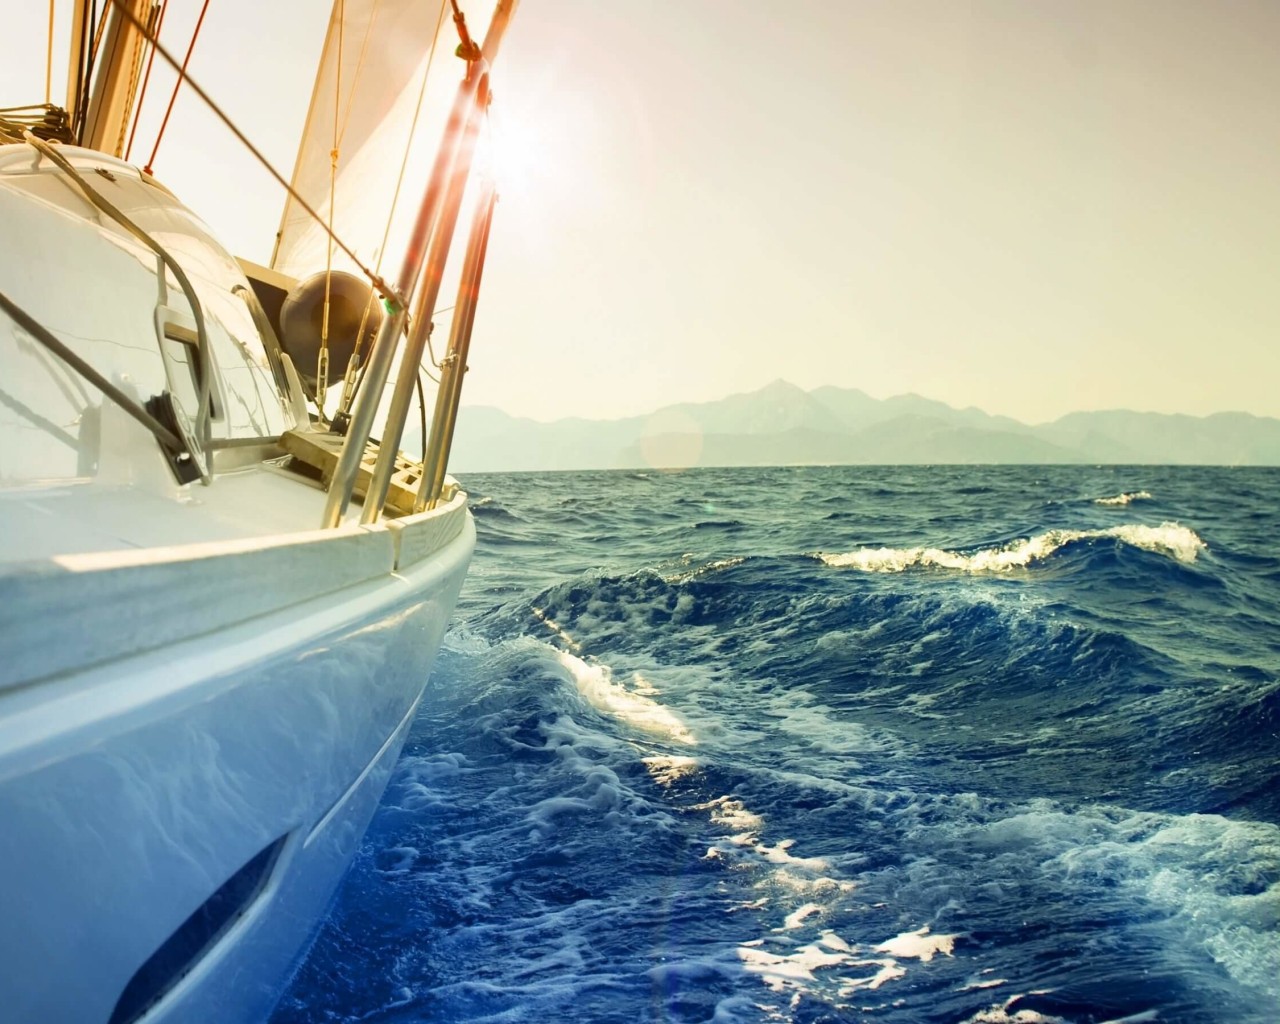 Yacht Sailing Downwind at Sunset Wallpaper for Desktop 1280x1024